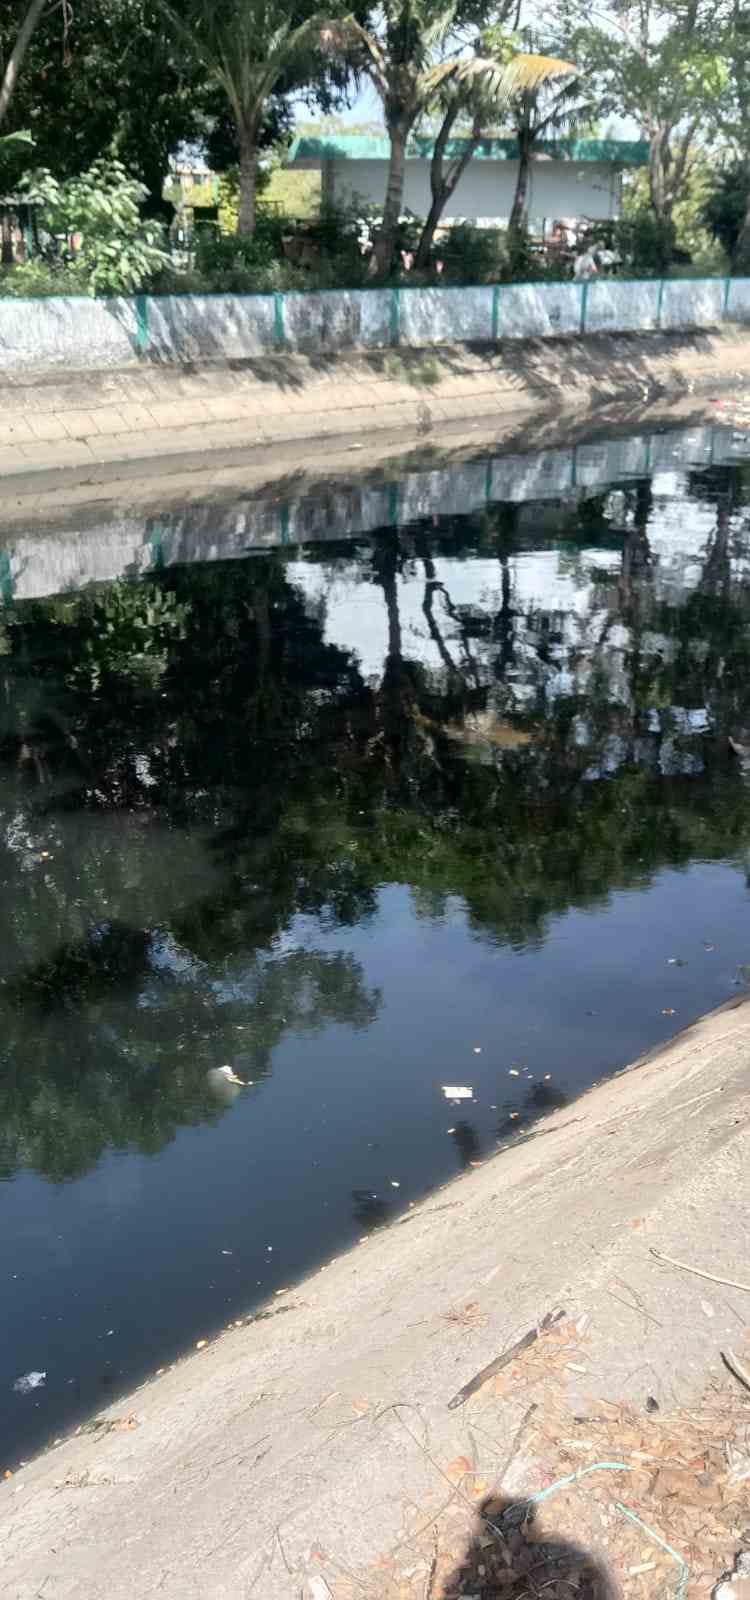 Hasil kinerja Satgas drainase DPU Kota Makassar yang telah mengangkat sampah plastik bekas minuman, hilangnya kesan kumuh dan kotor